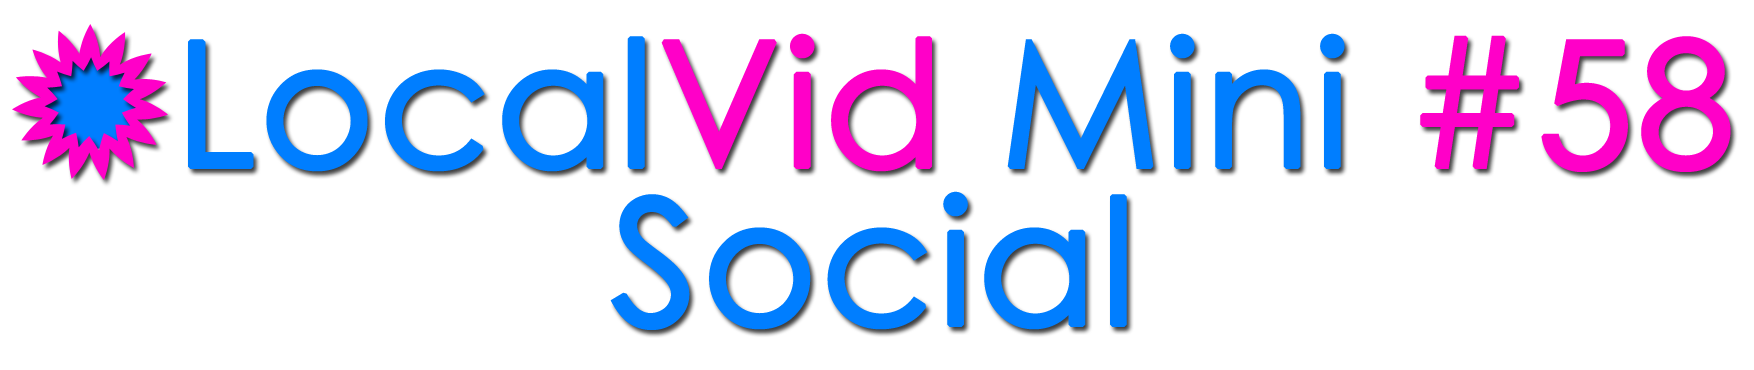 Logo Local Vid Mini Social 58